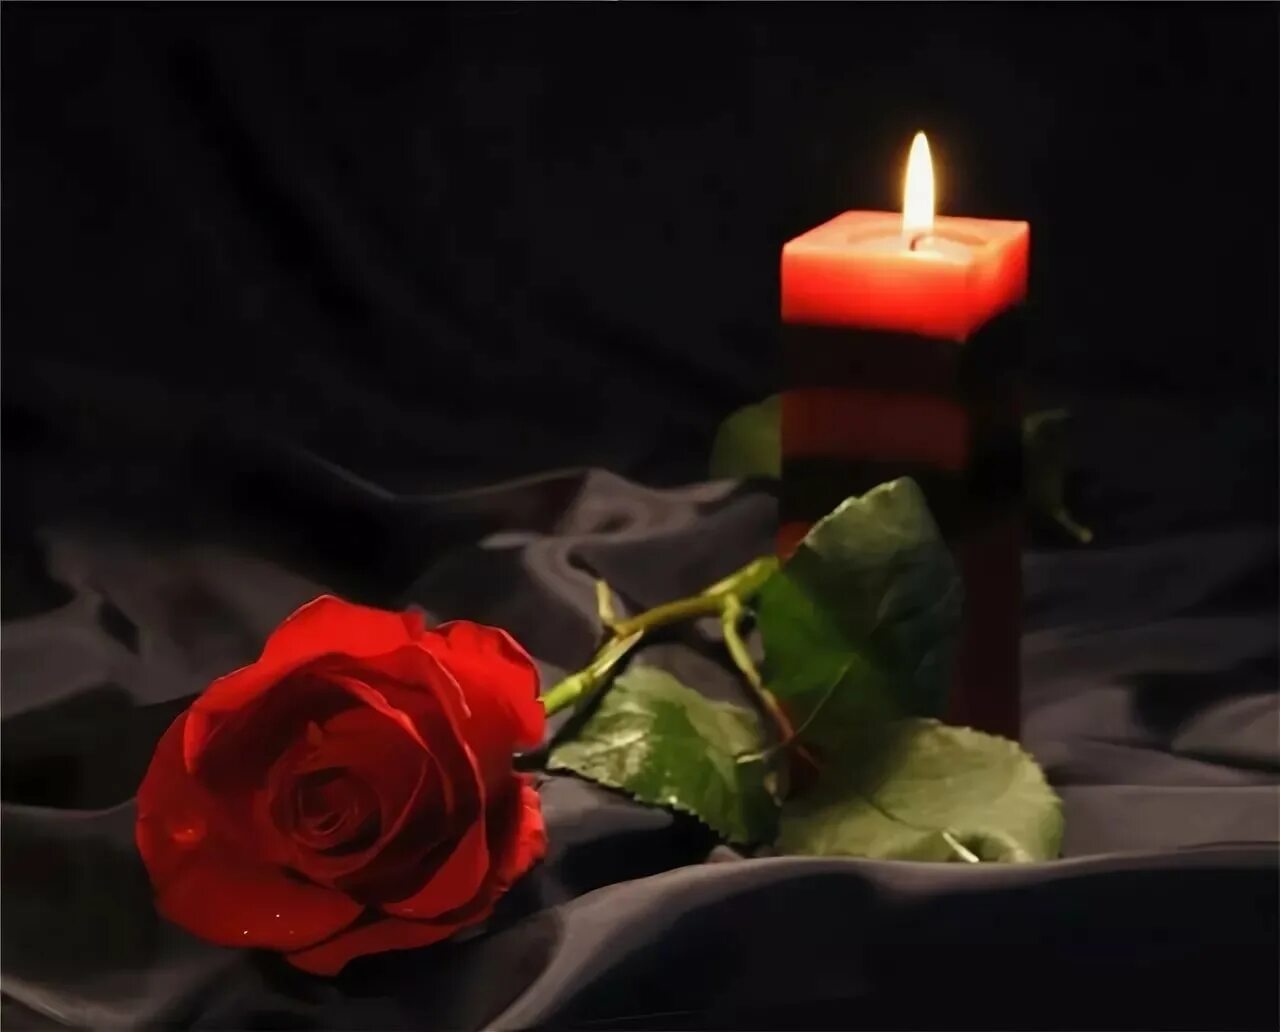 Траурные свечи и цветы. Свеча памяти и цветы. Свеча и цветы траур. Траурные розы и свечи.